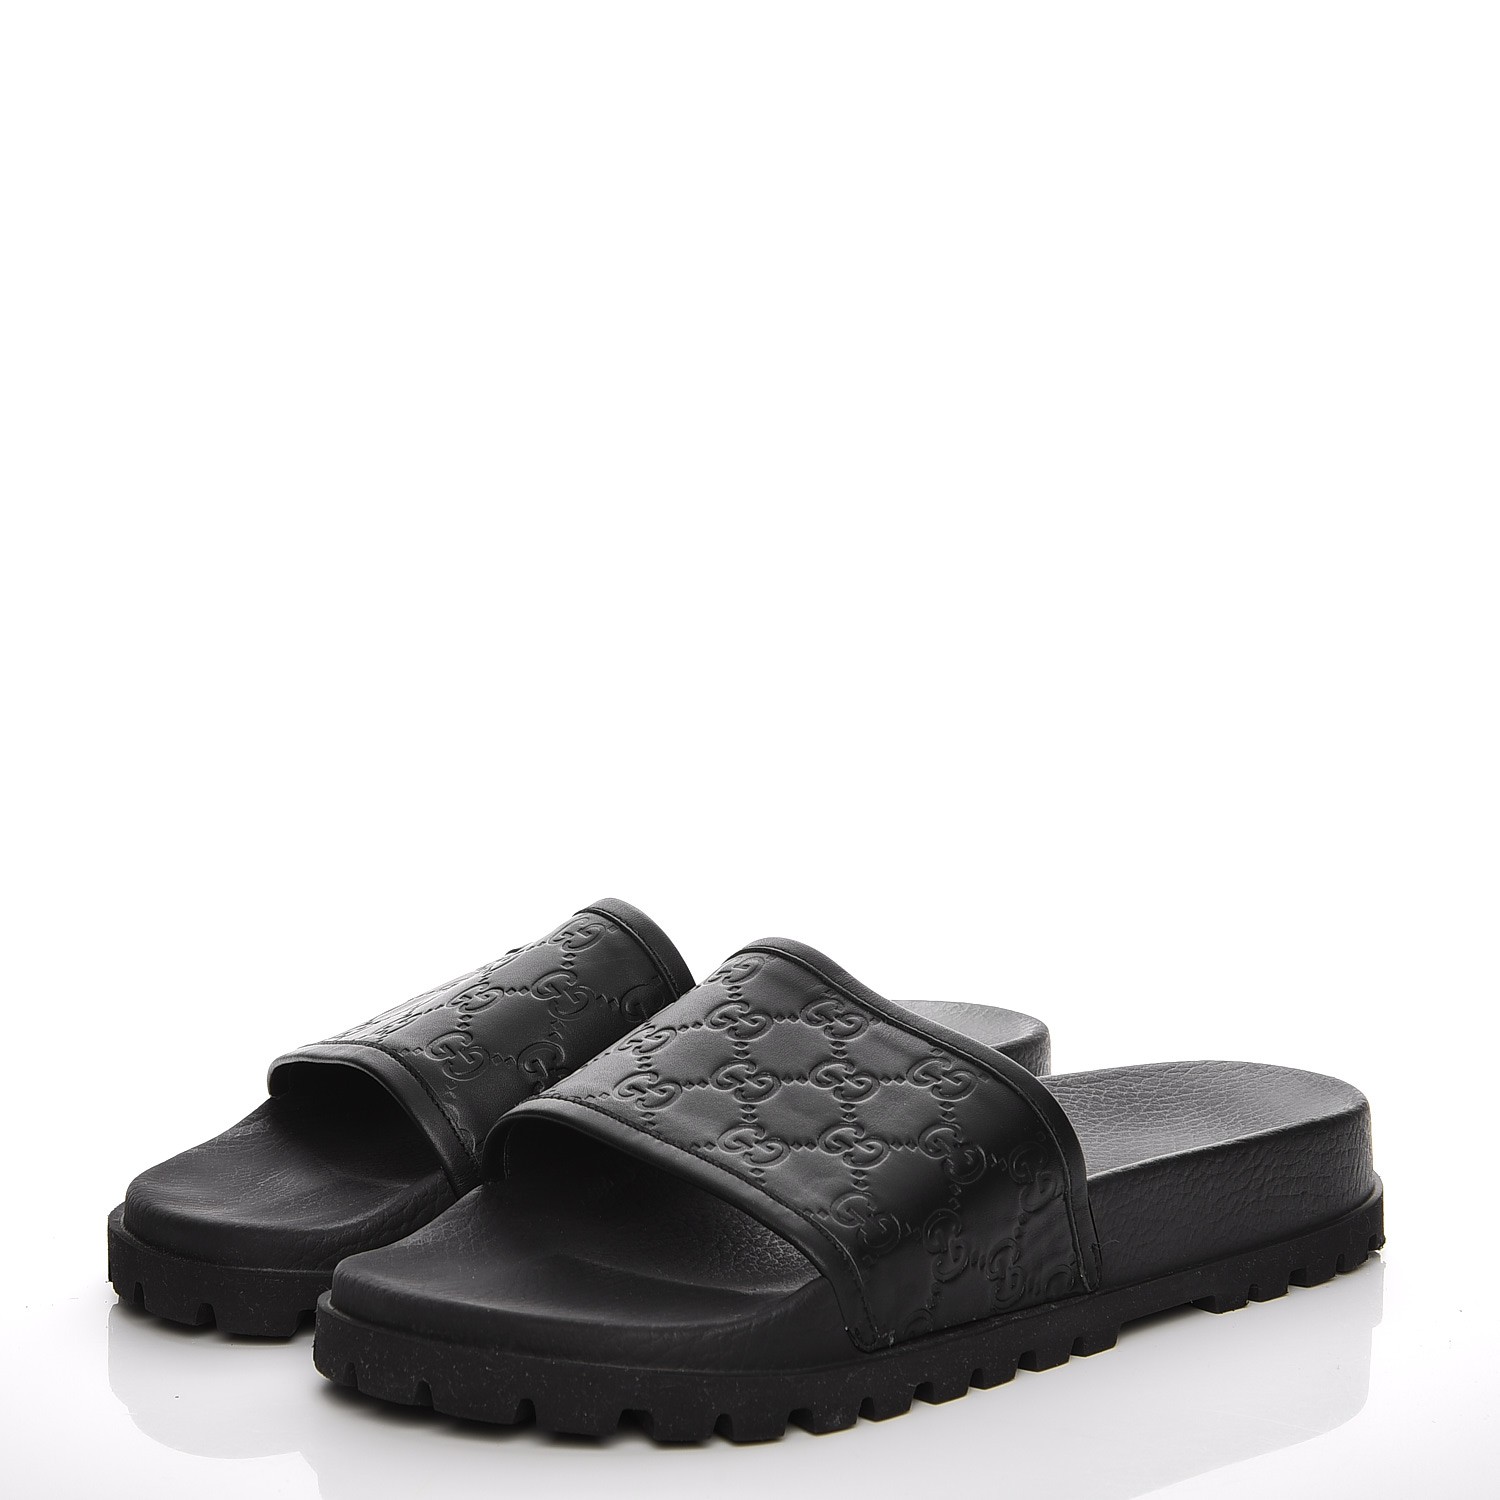 GUCCI Guccissima Mens Slide Sandals 11 